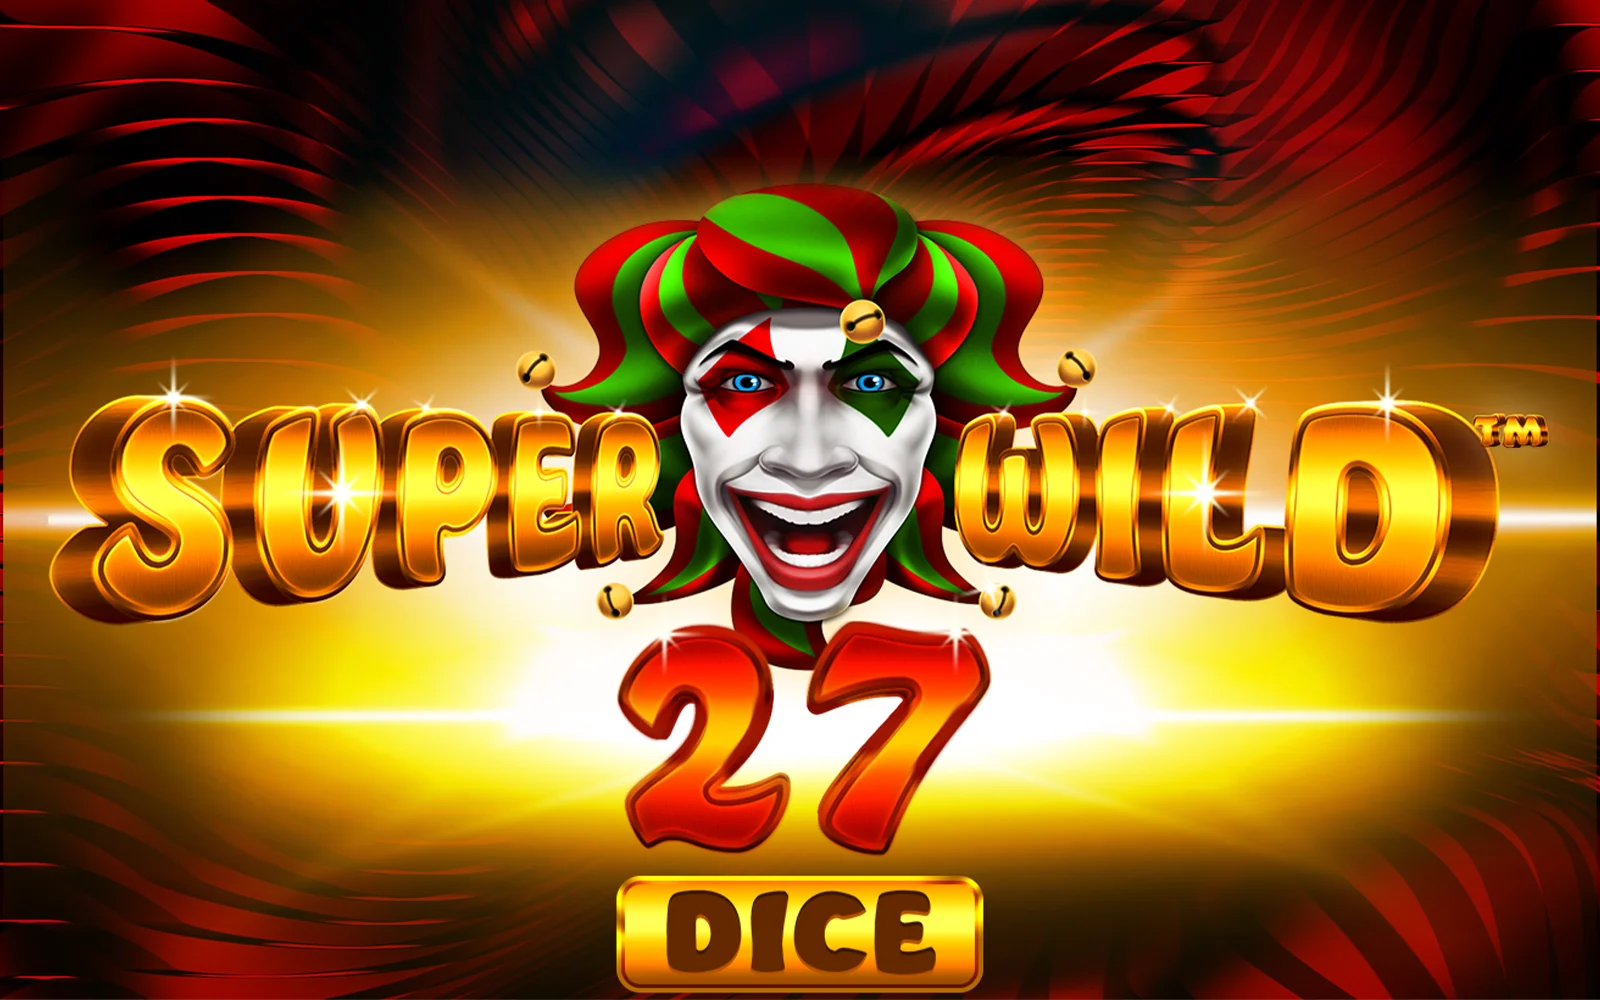 Play Super Wild 27 Dice on Starcasino.be online casino